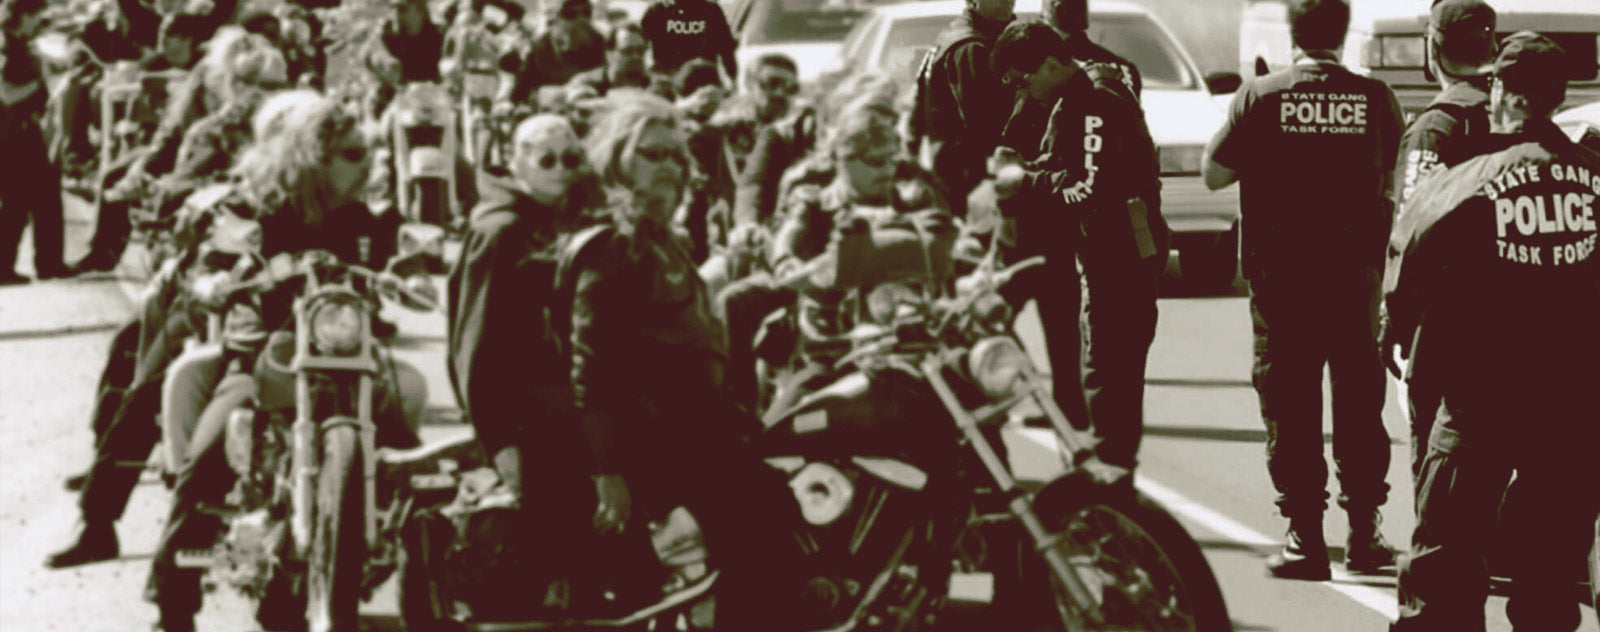 Gang moto et police